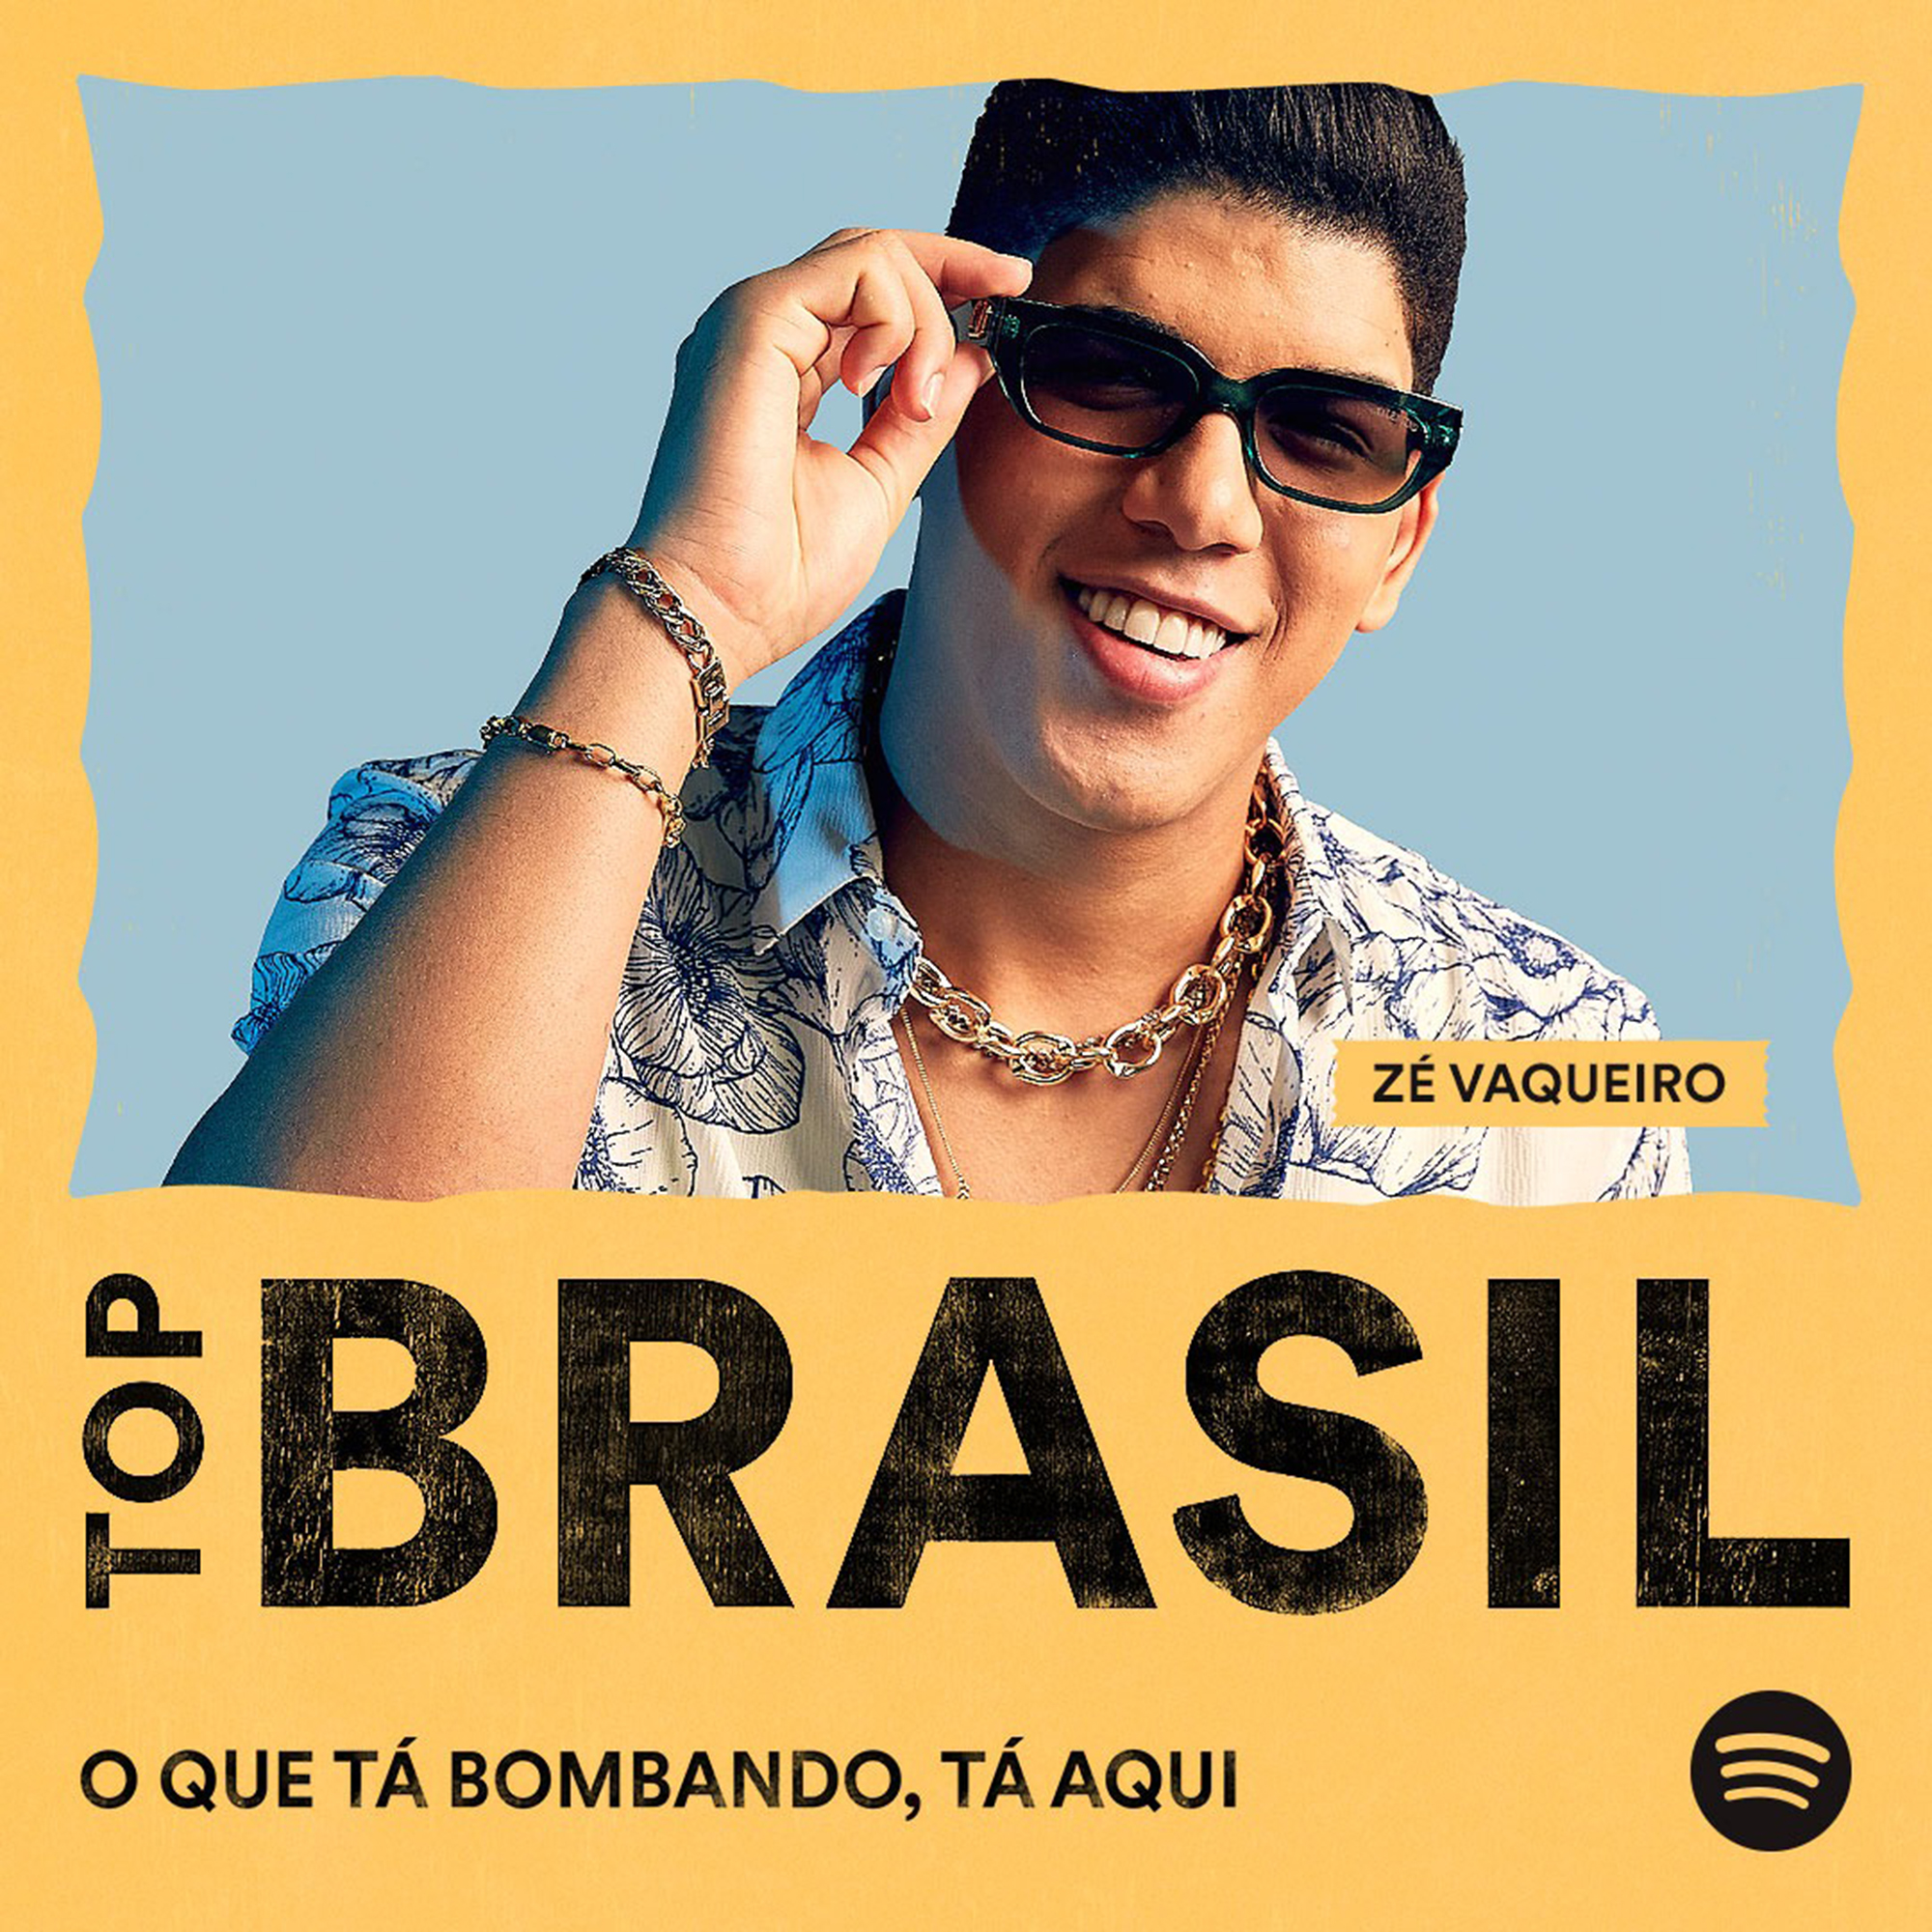 Blog Clístenes Carlos » Zé Vaqueiro é o artista destaque na playlist “Top  Brasil” do Spotify